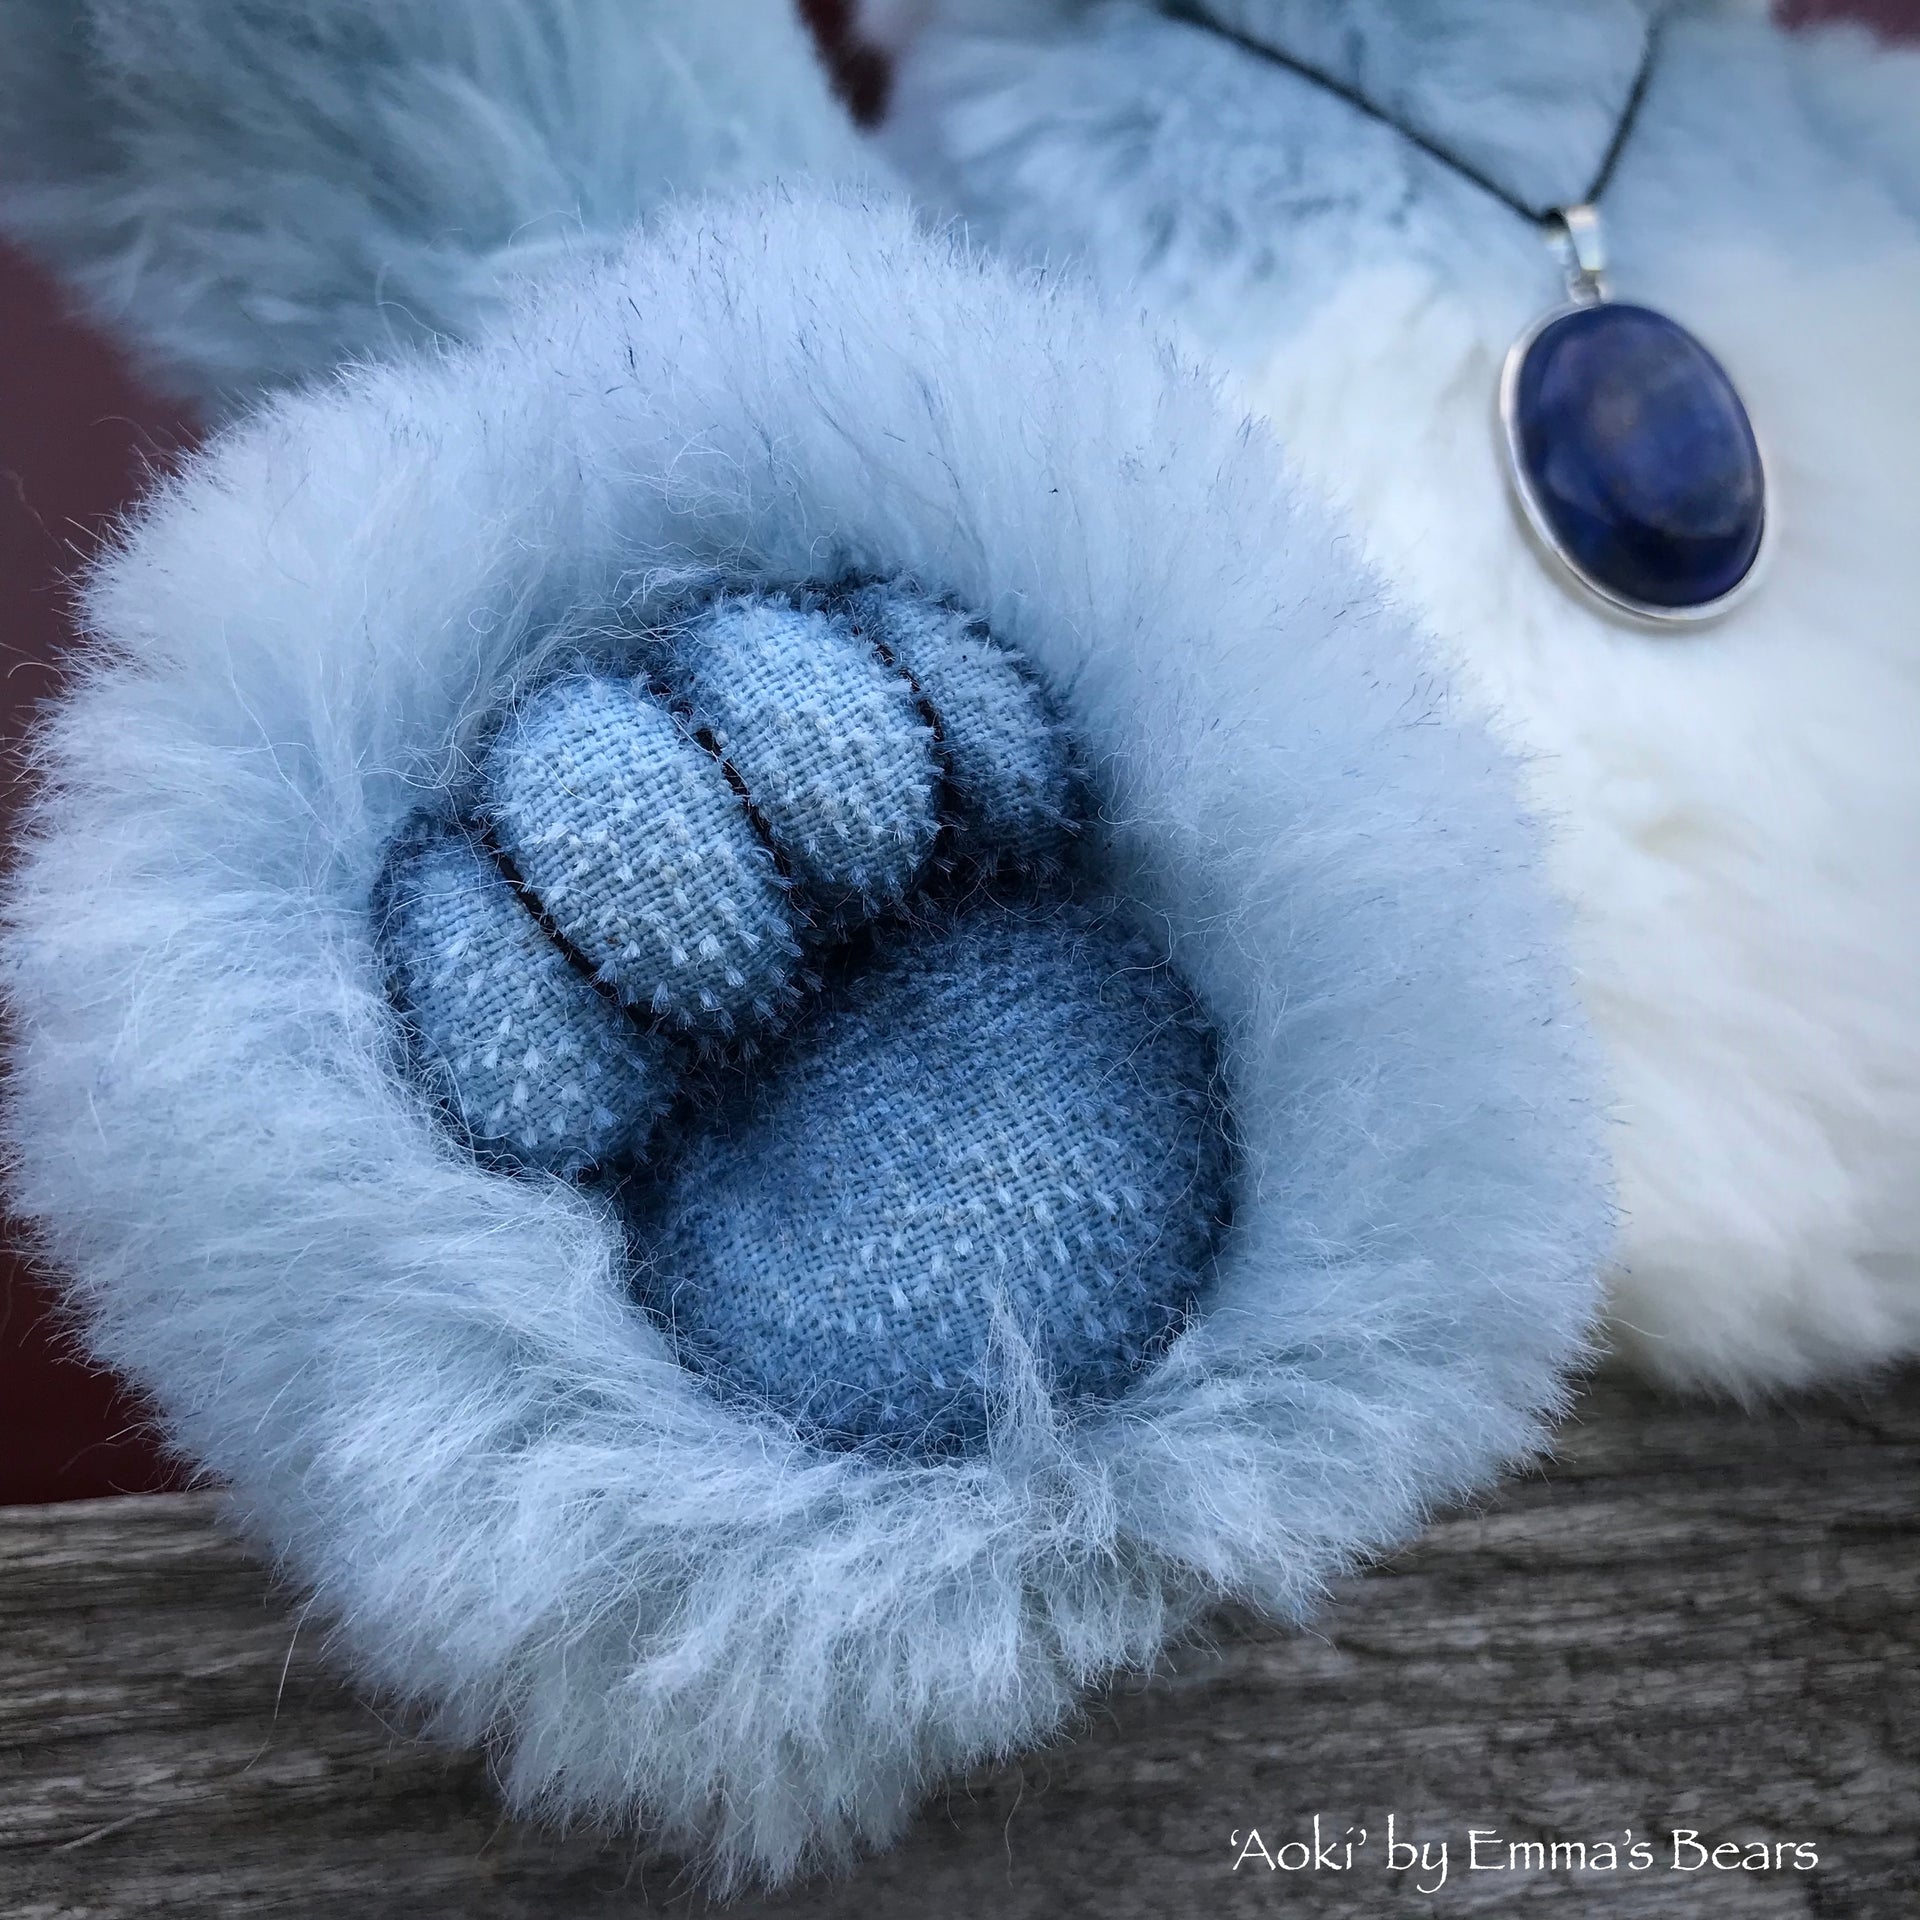 Aoki - 16" Alpaca and Faux Fur Artist Easter Bear by Emma's Bears - OOAK